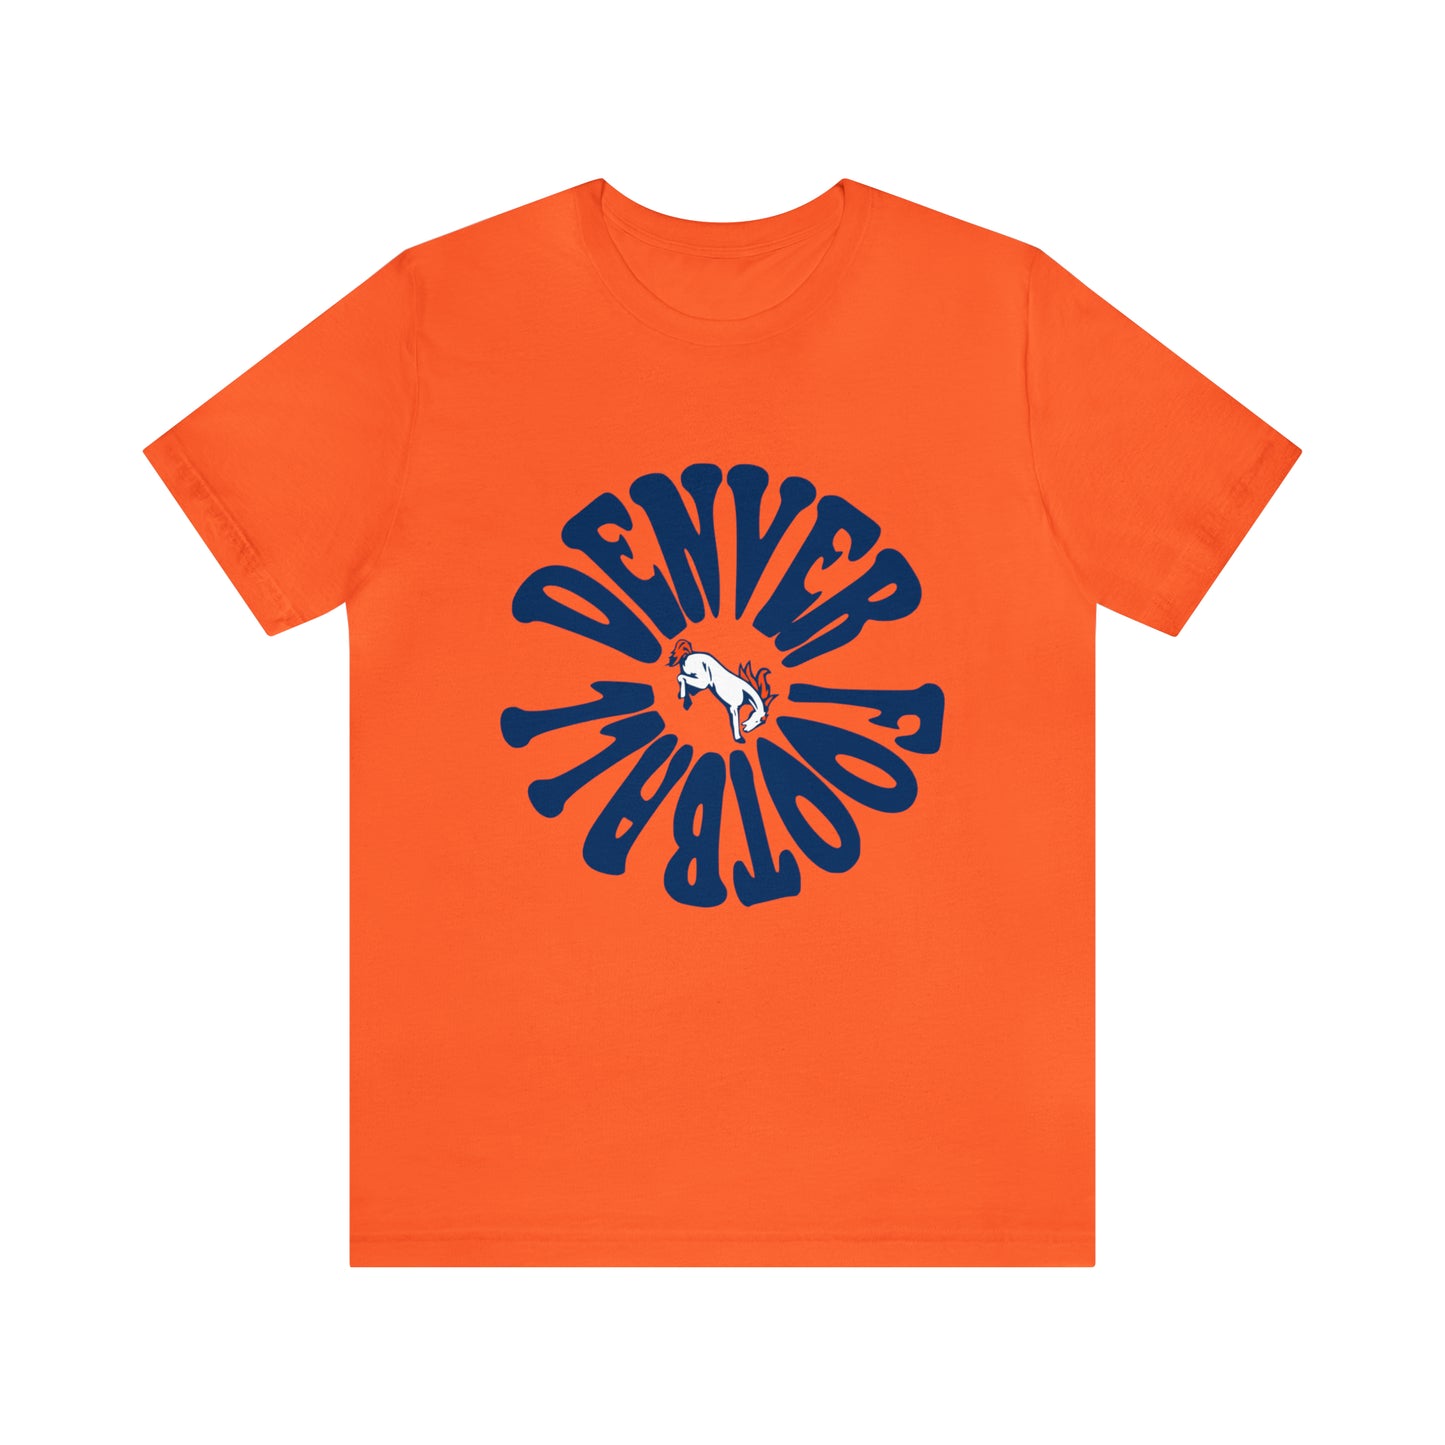 Retro Denver Broncos Tee - Vintage Colorado Football Style Short Sleeve T-Shirt Apparel - Men's & Women's Unisex Sizing